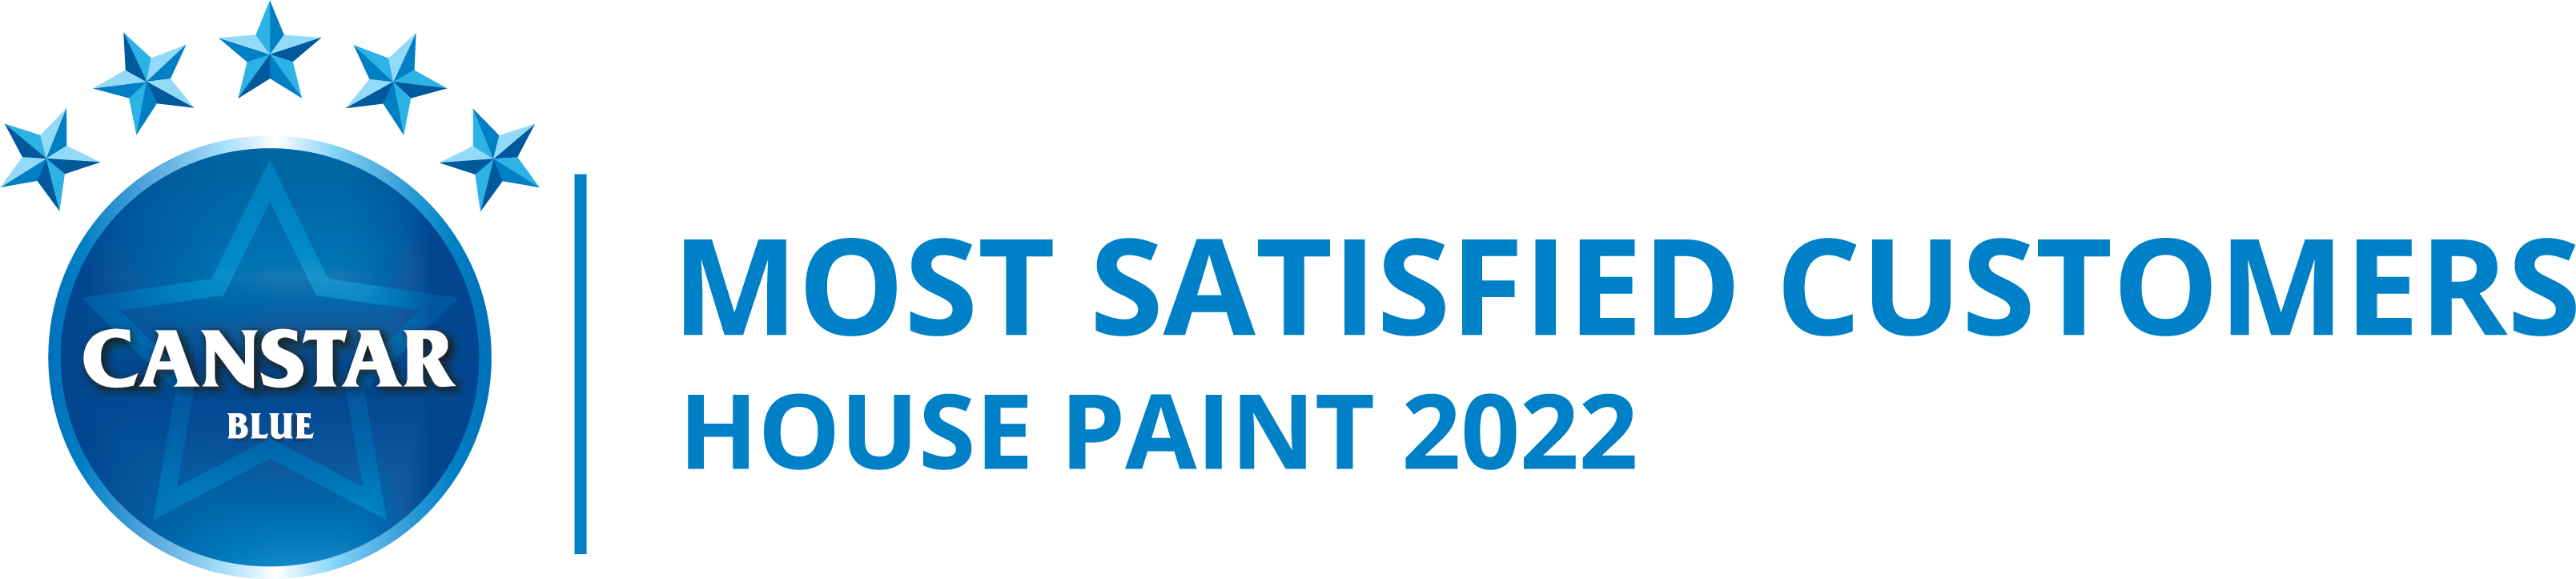 MSC award logo 2022 house paint